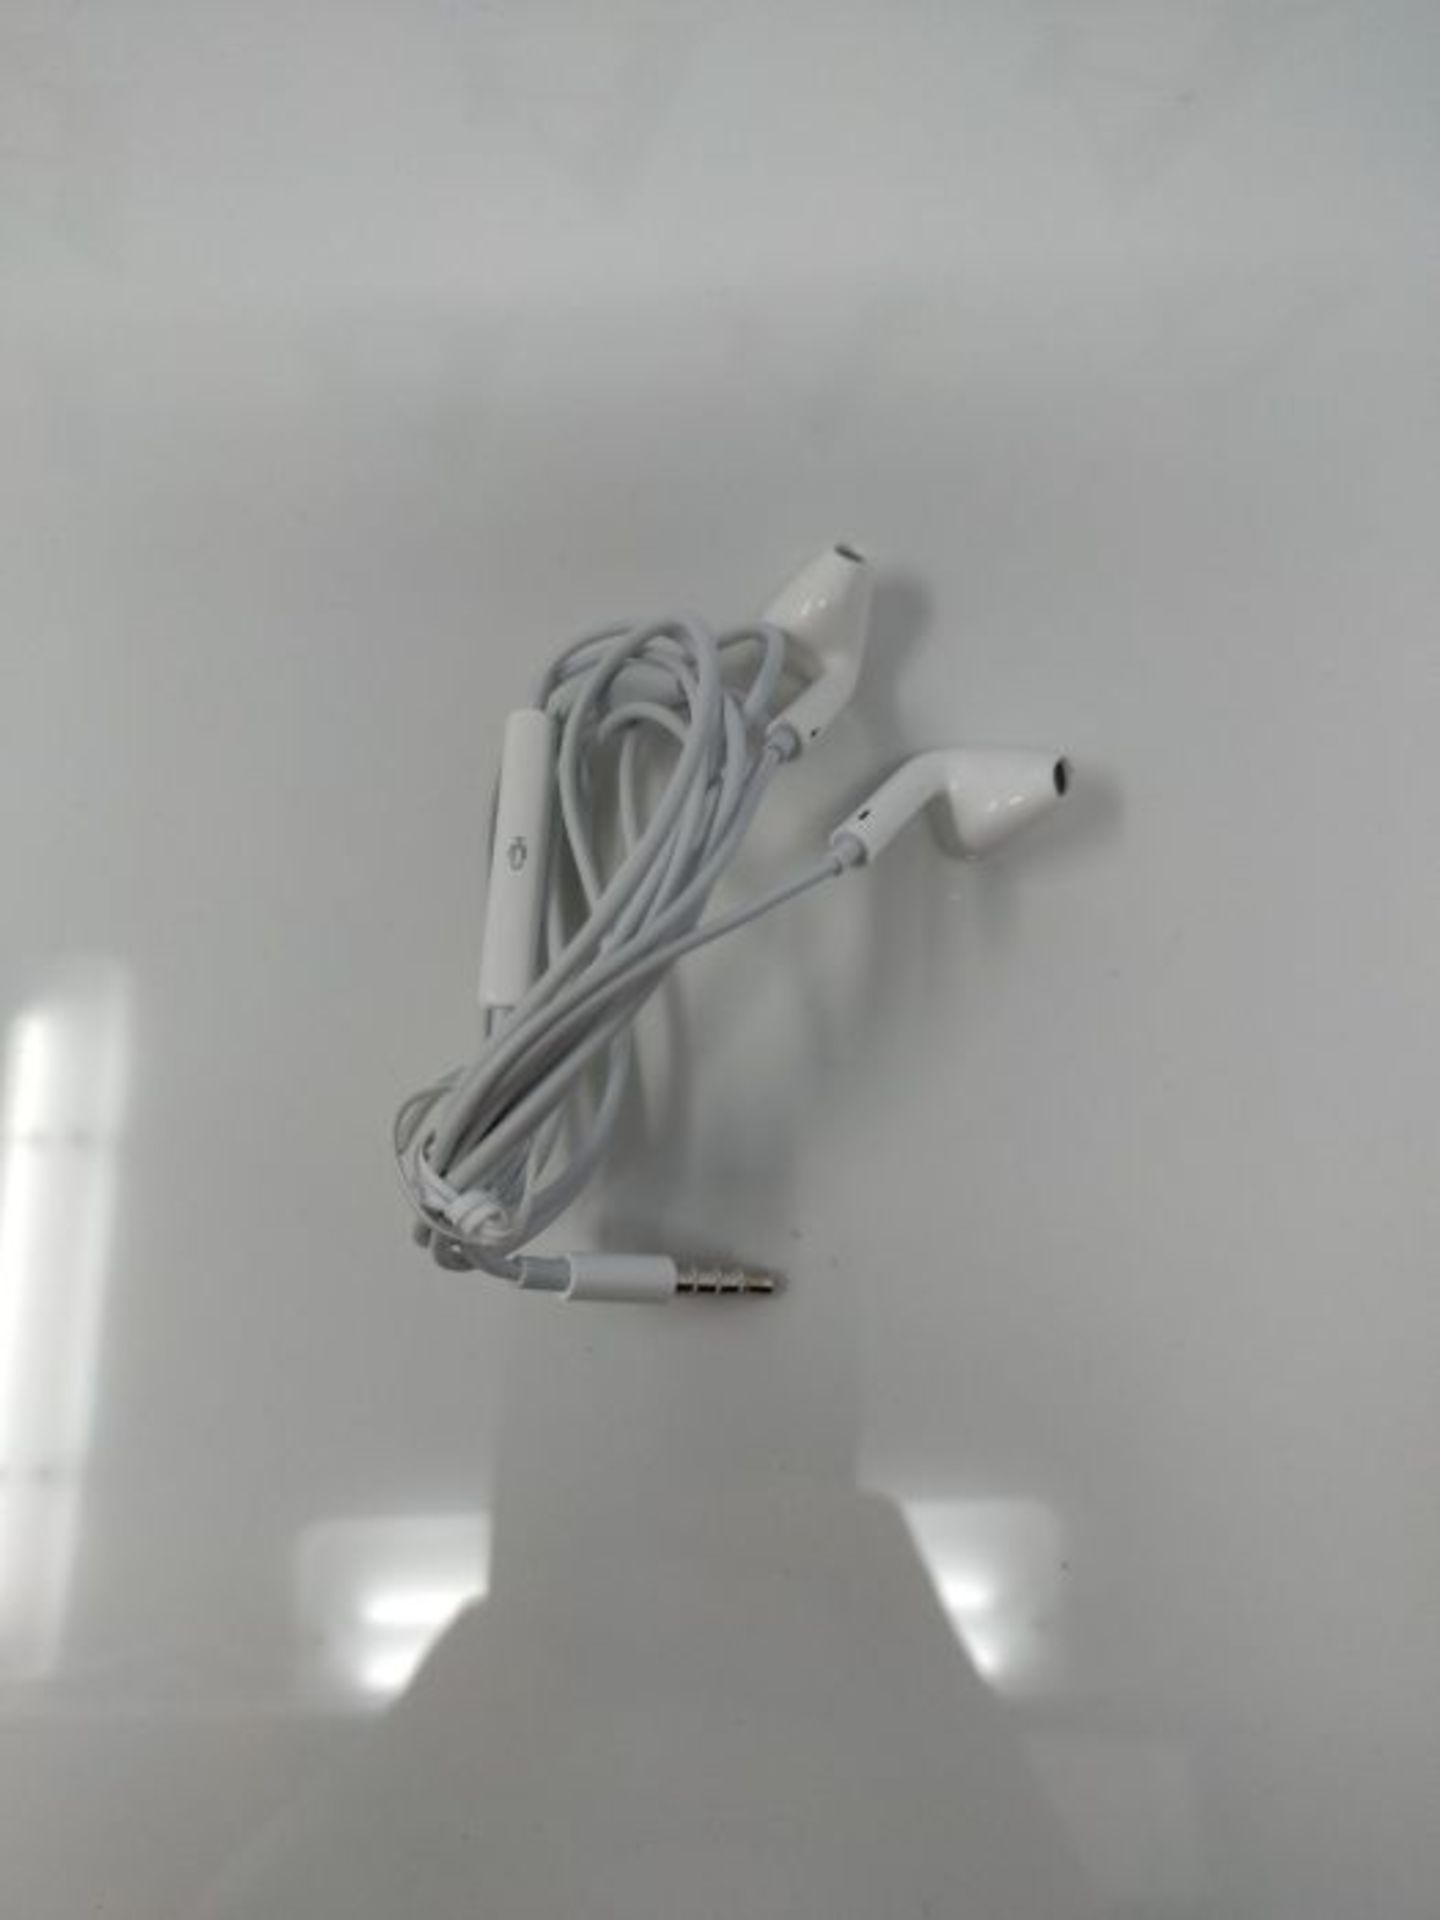 Apple EarPods with 3.5mm Headphone Plug - White - Image 2 of 2